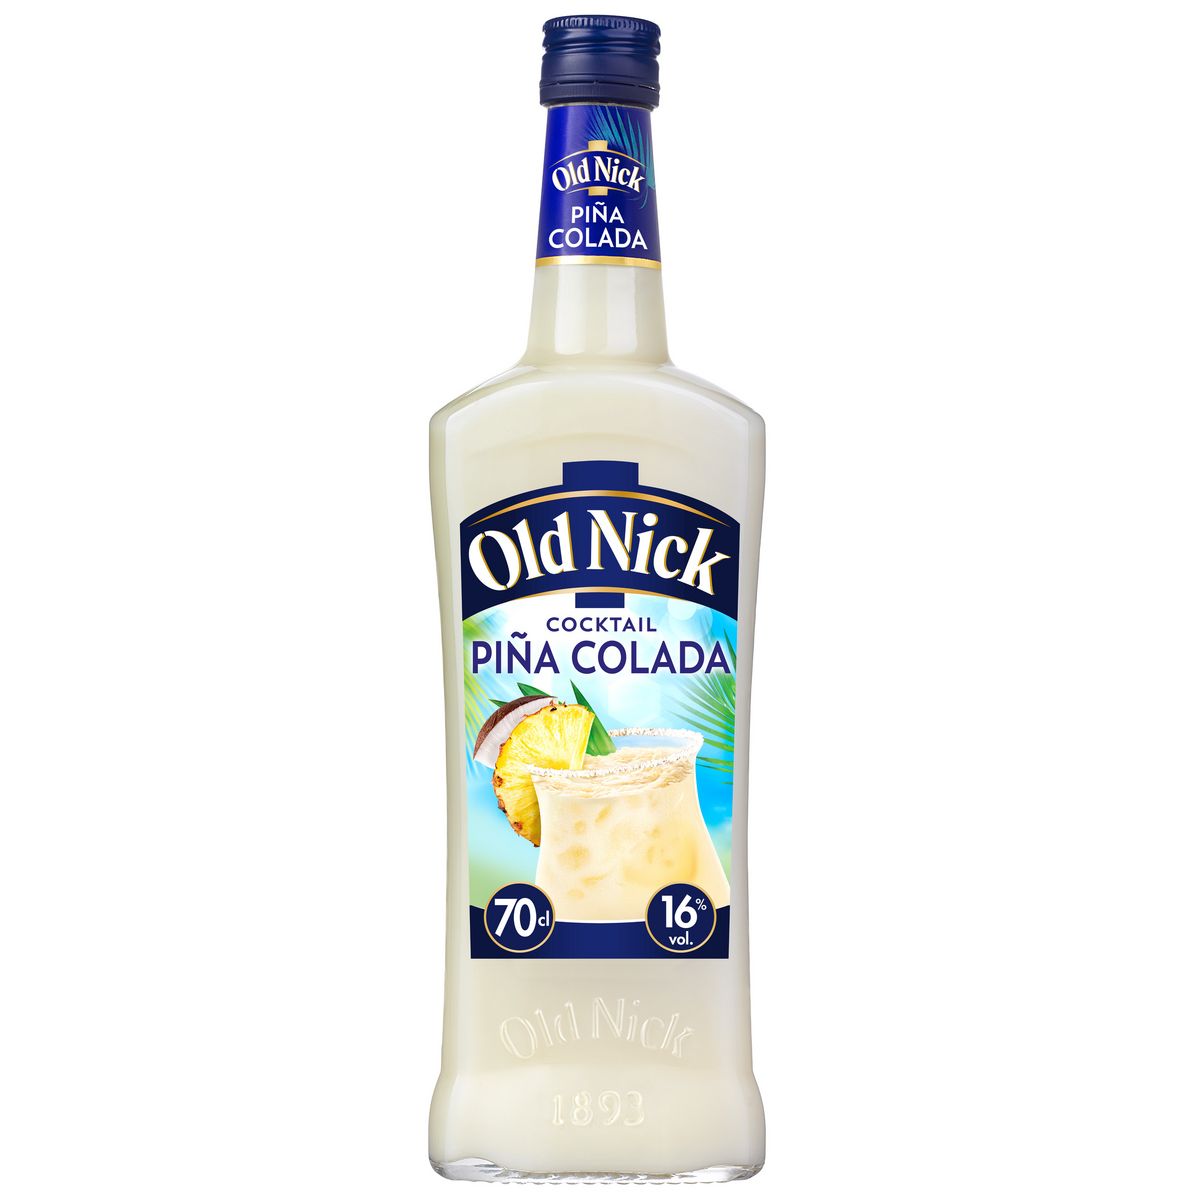 OLD NICK Cocktail pina colada à base de rhum 16% 70cl